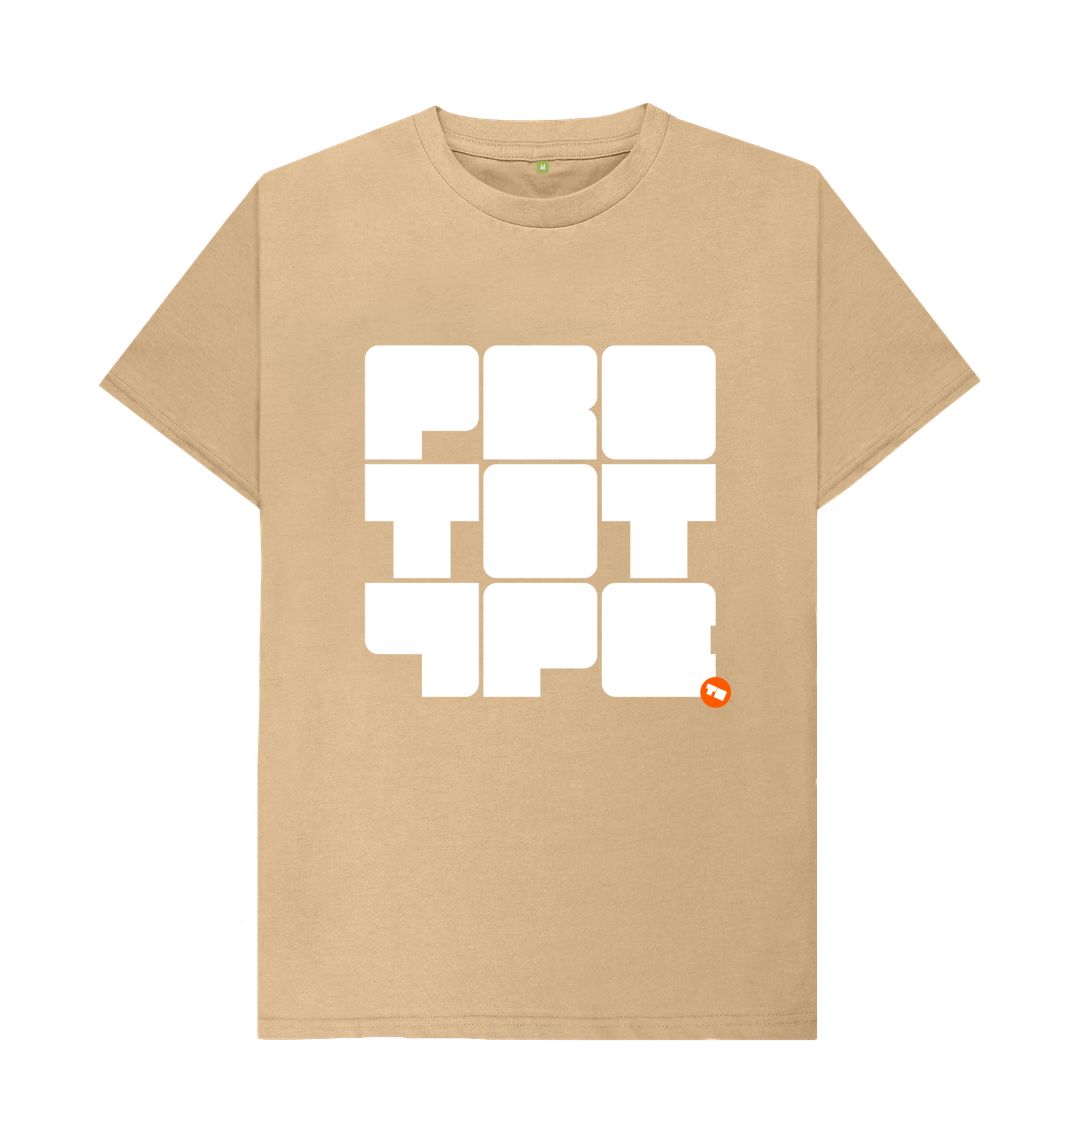 Sand PrototypeTM T-shirts